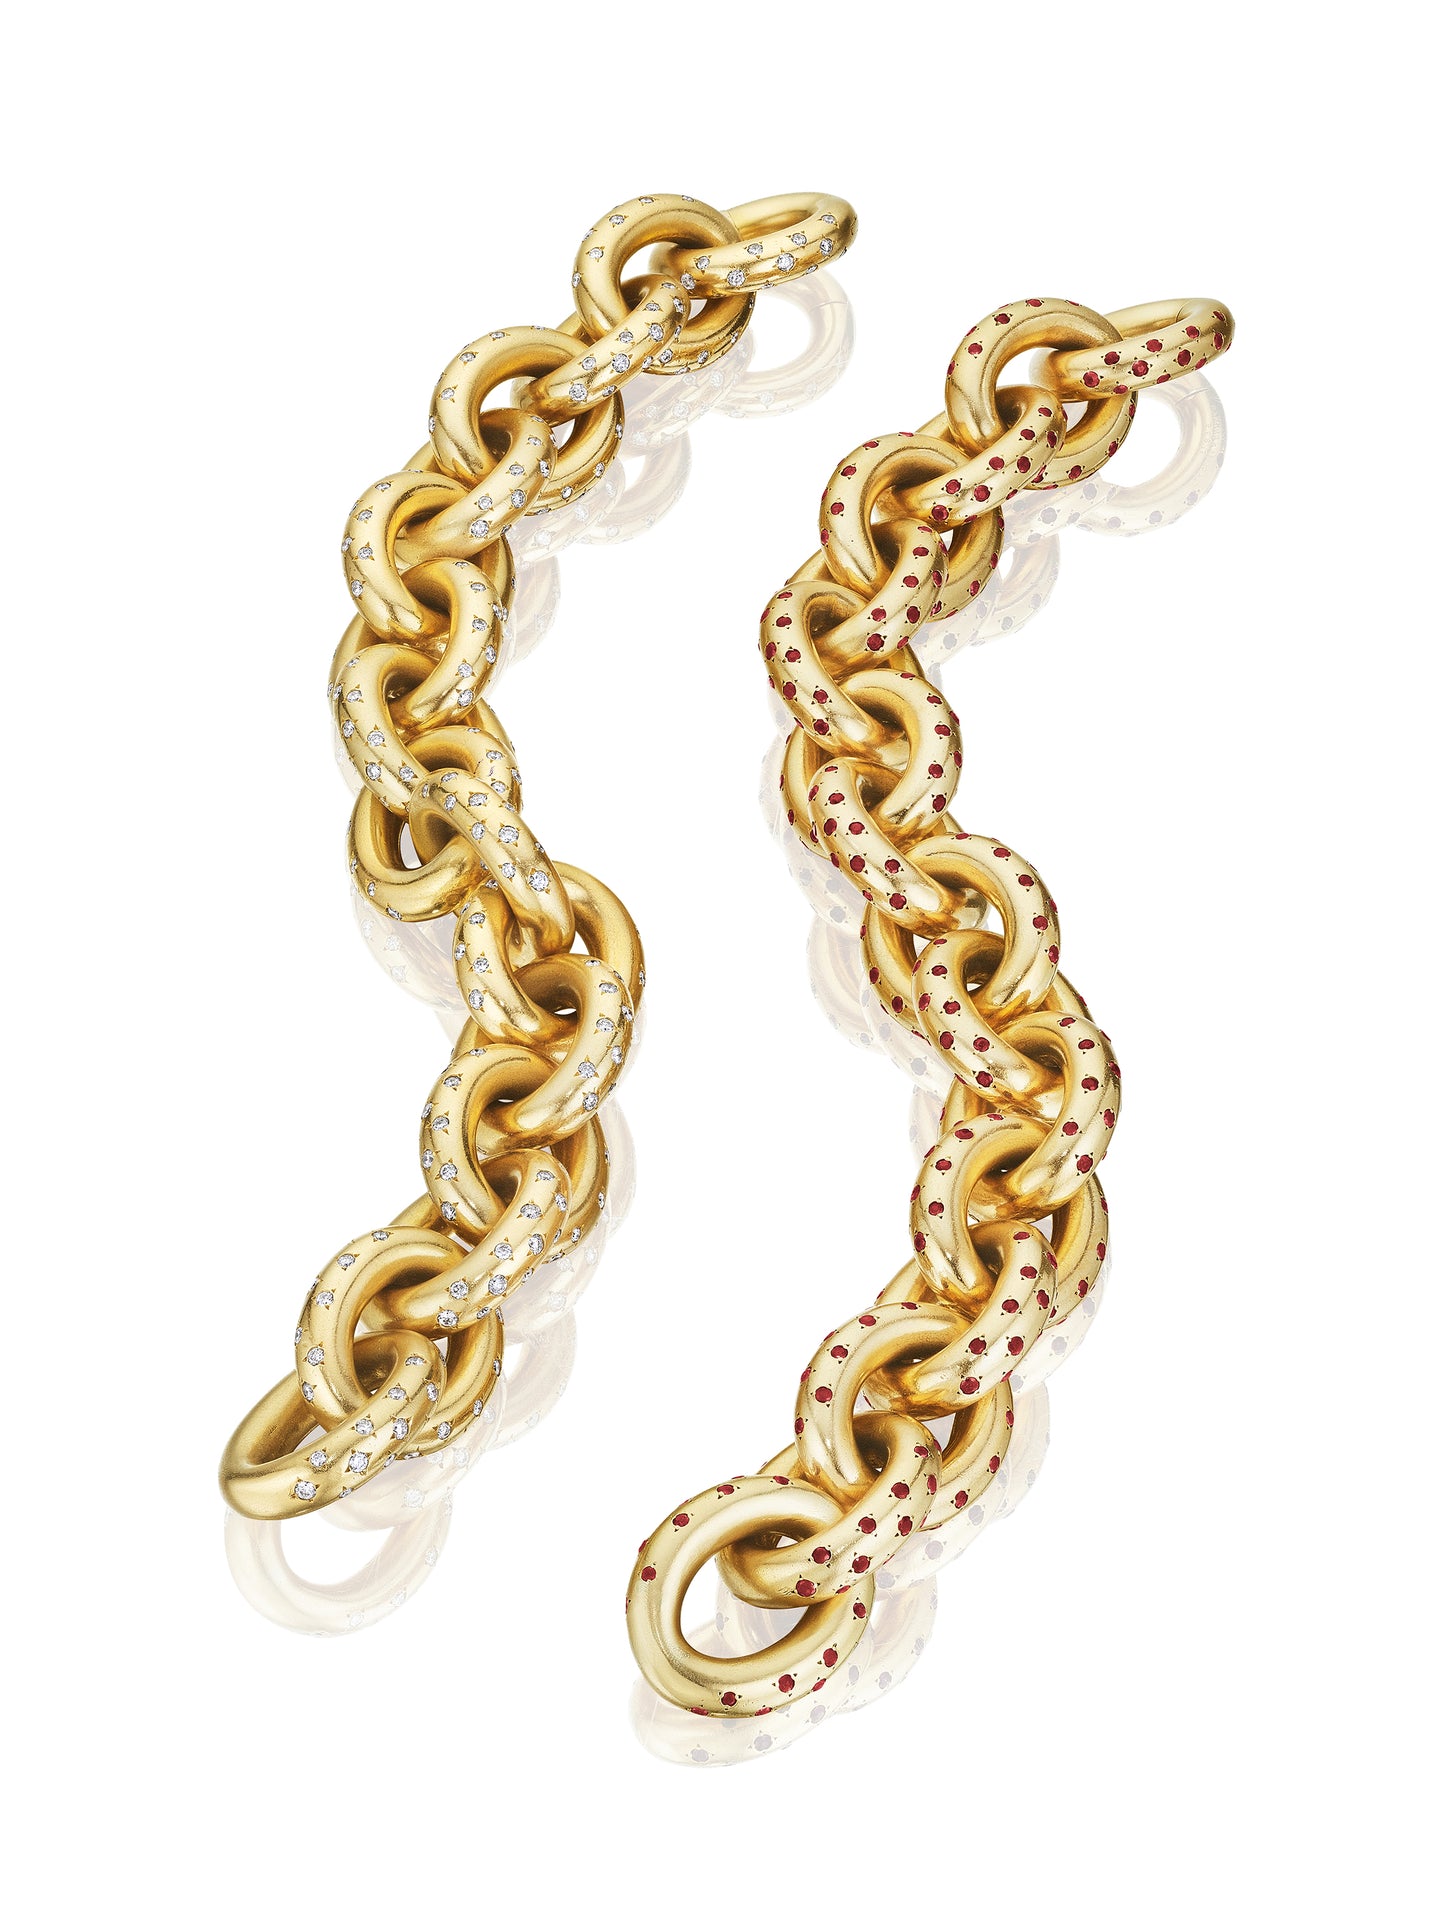 Pair of Art Moderne Gem-Set Gold Link Bracelets by Van Cleef & Arpels, Paris, circa 1940